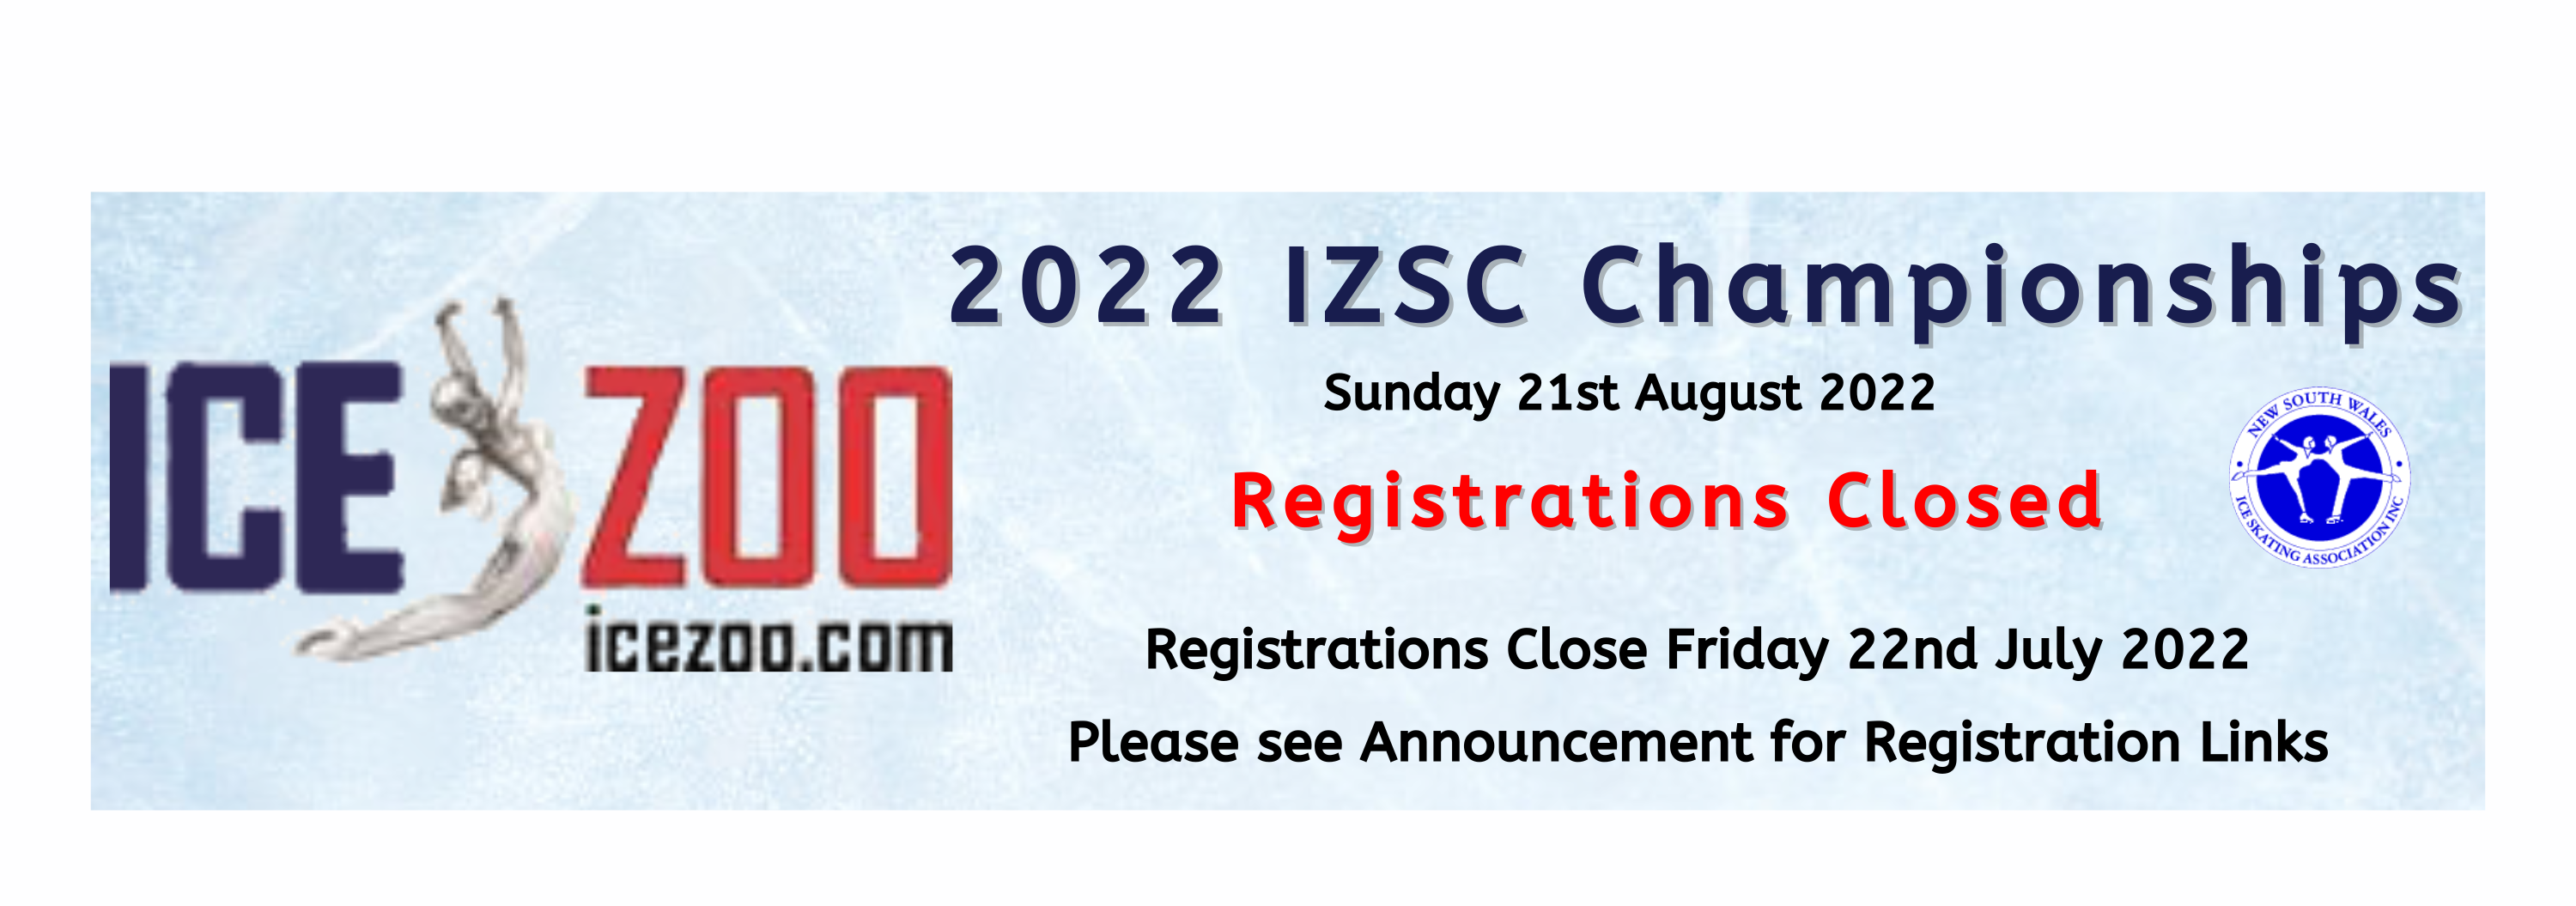 IZSC Championships